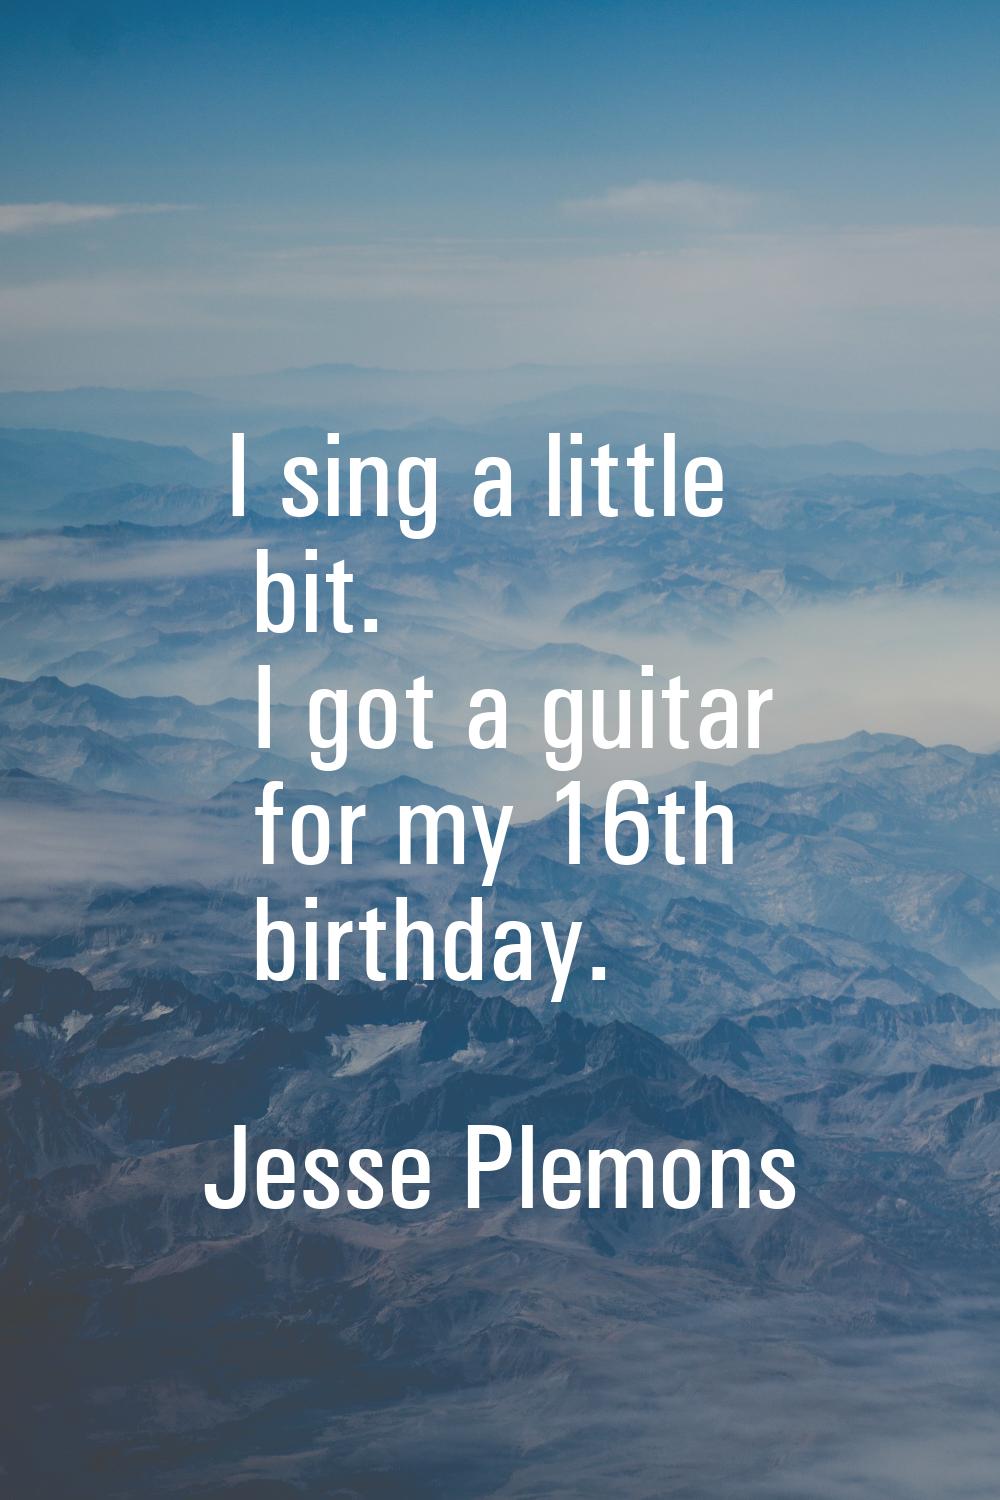 I sing a little bit. I got a guitar for my 16th birthday.